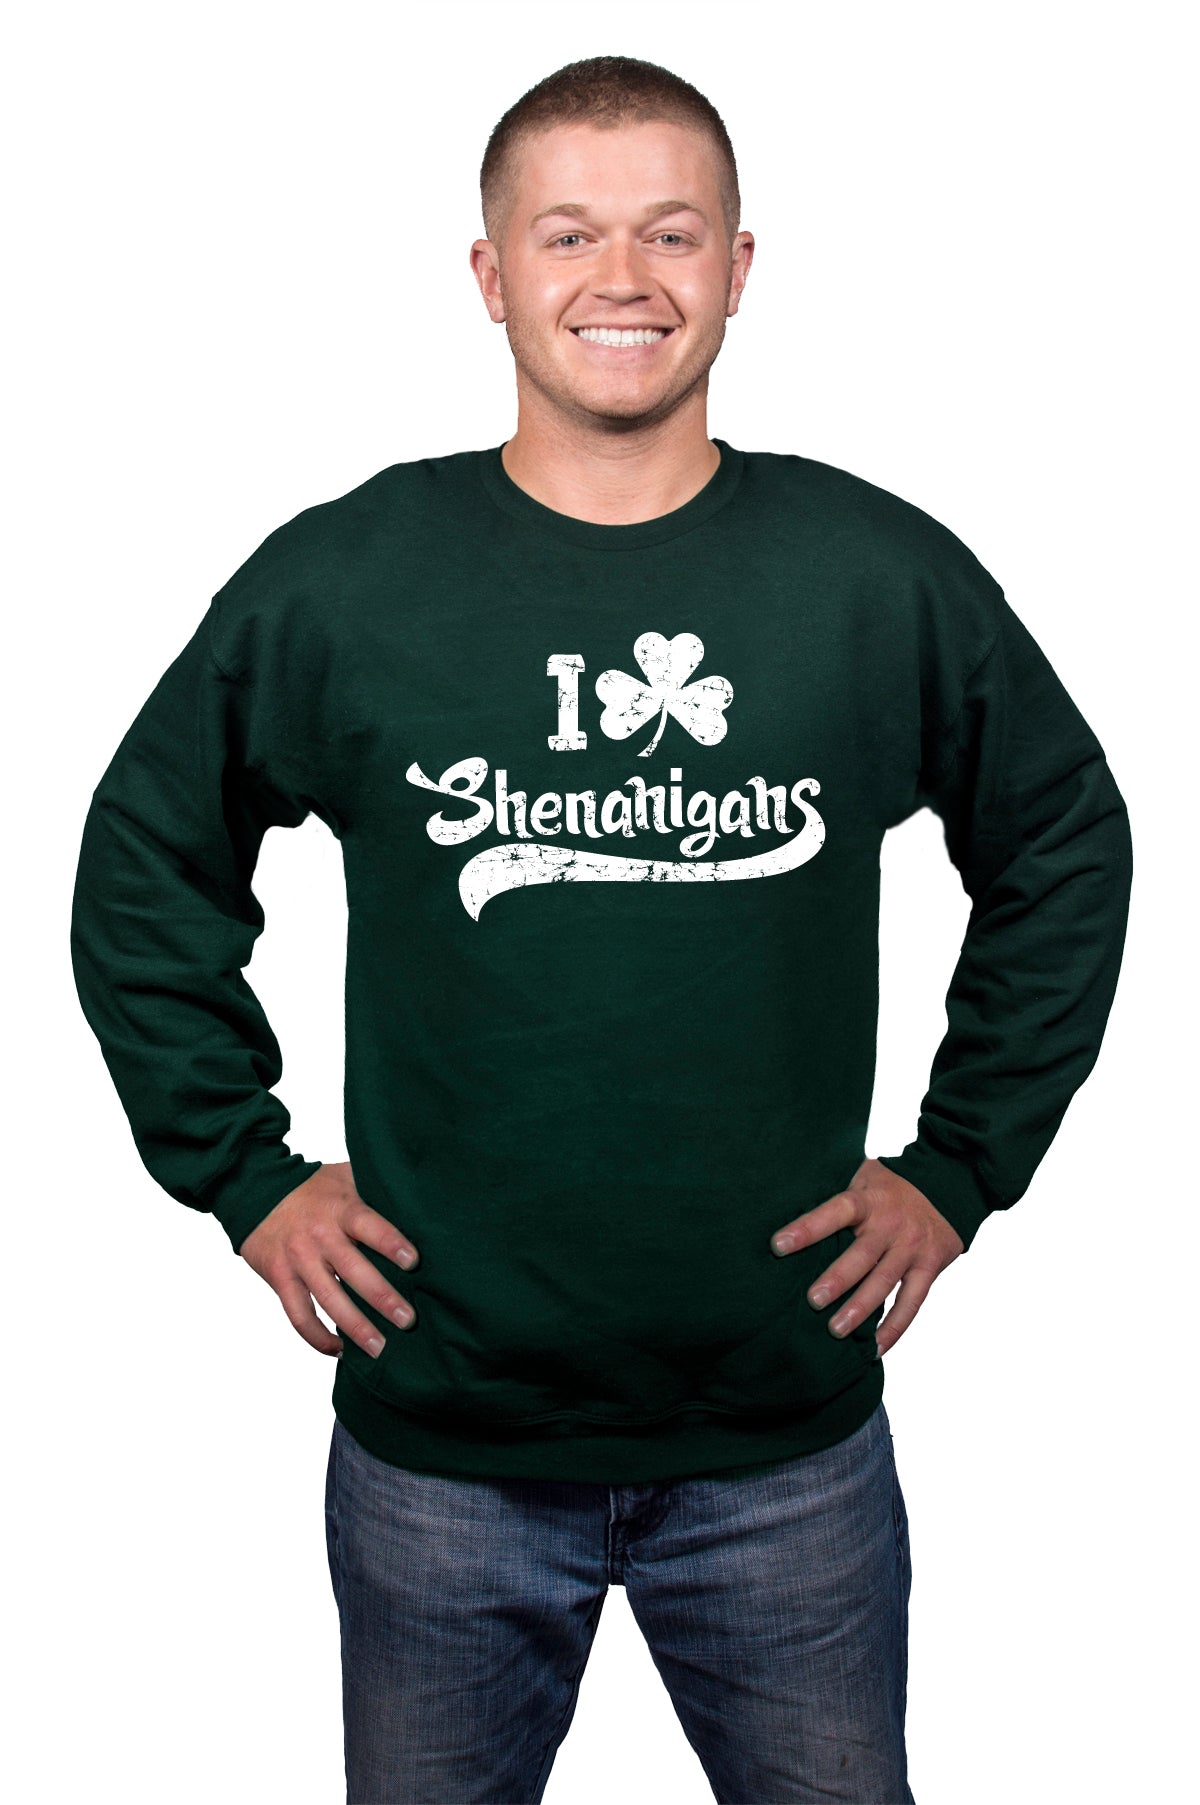 I Clover Shenanigans Crew Neck Sweatshirt